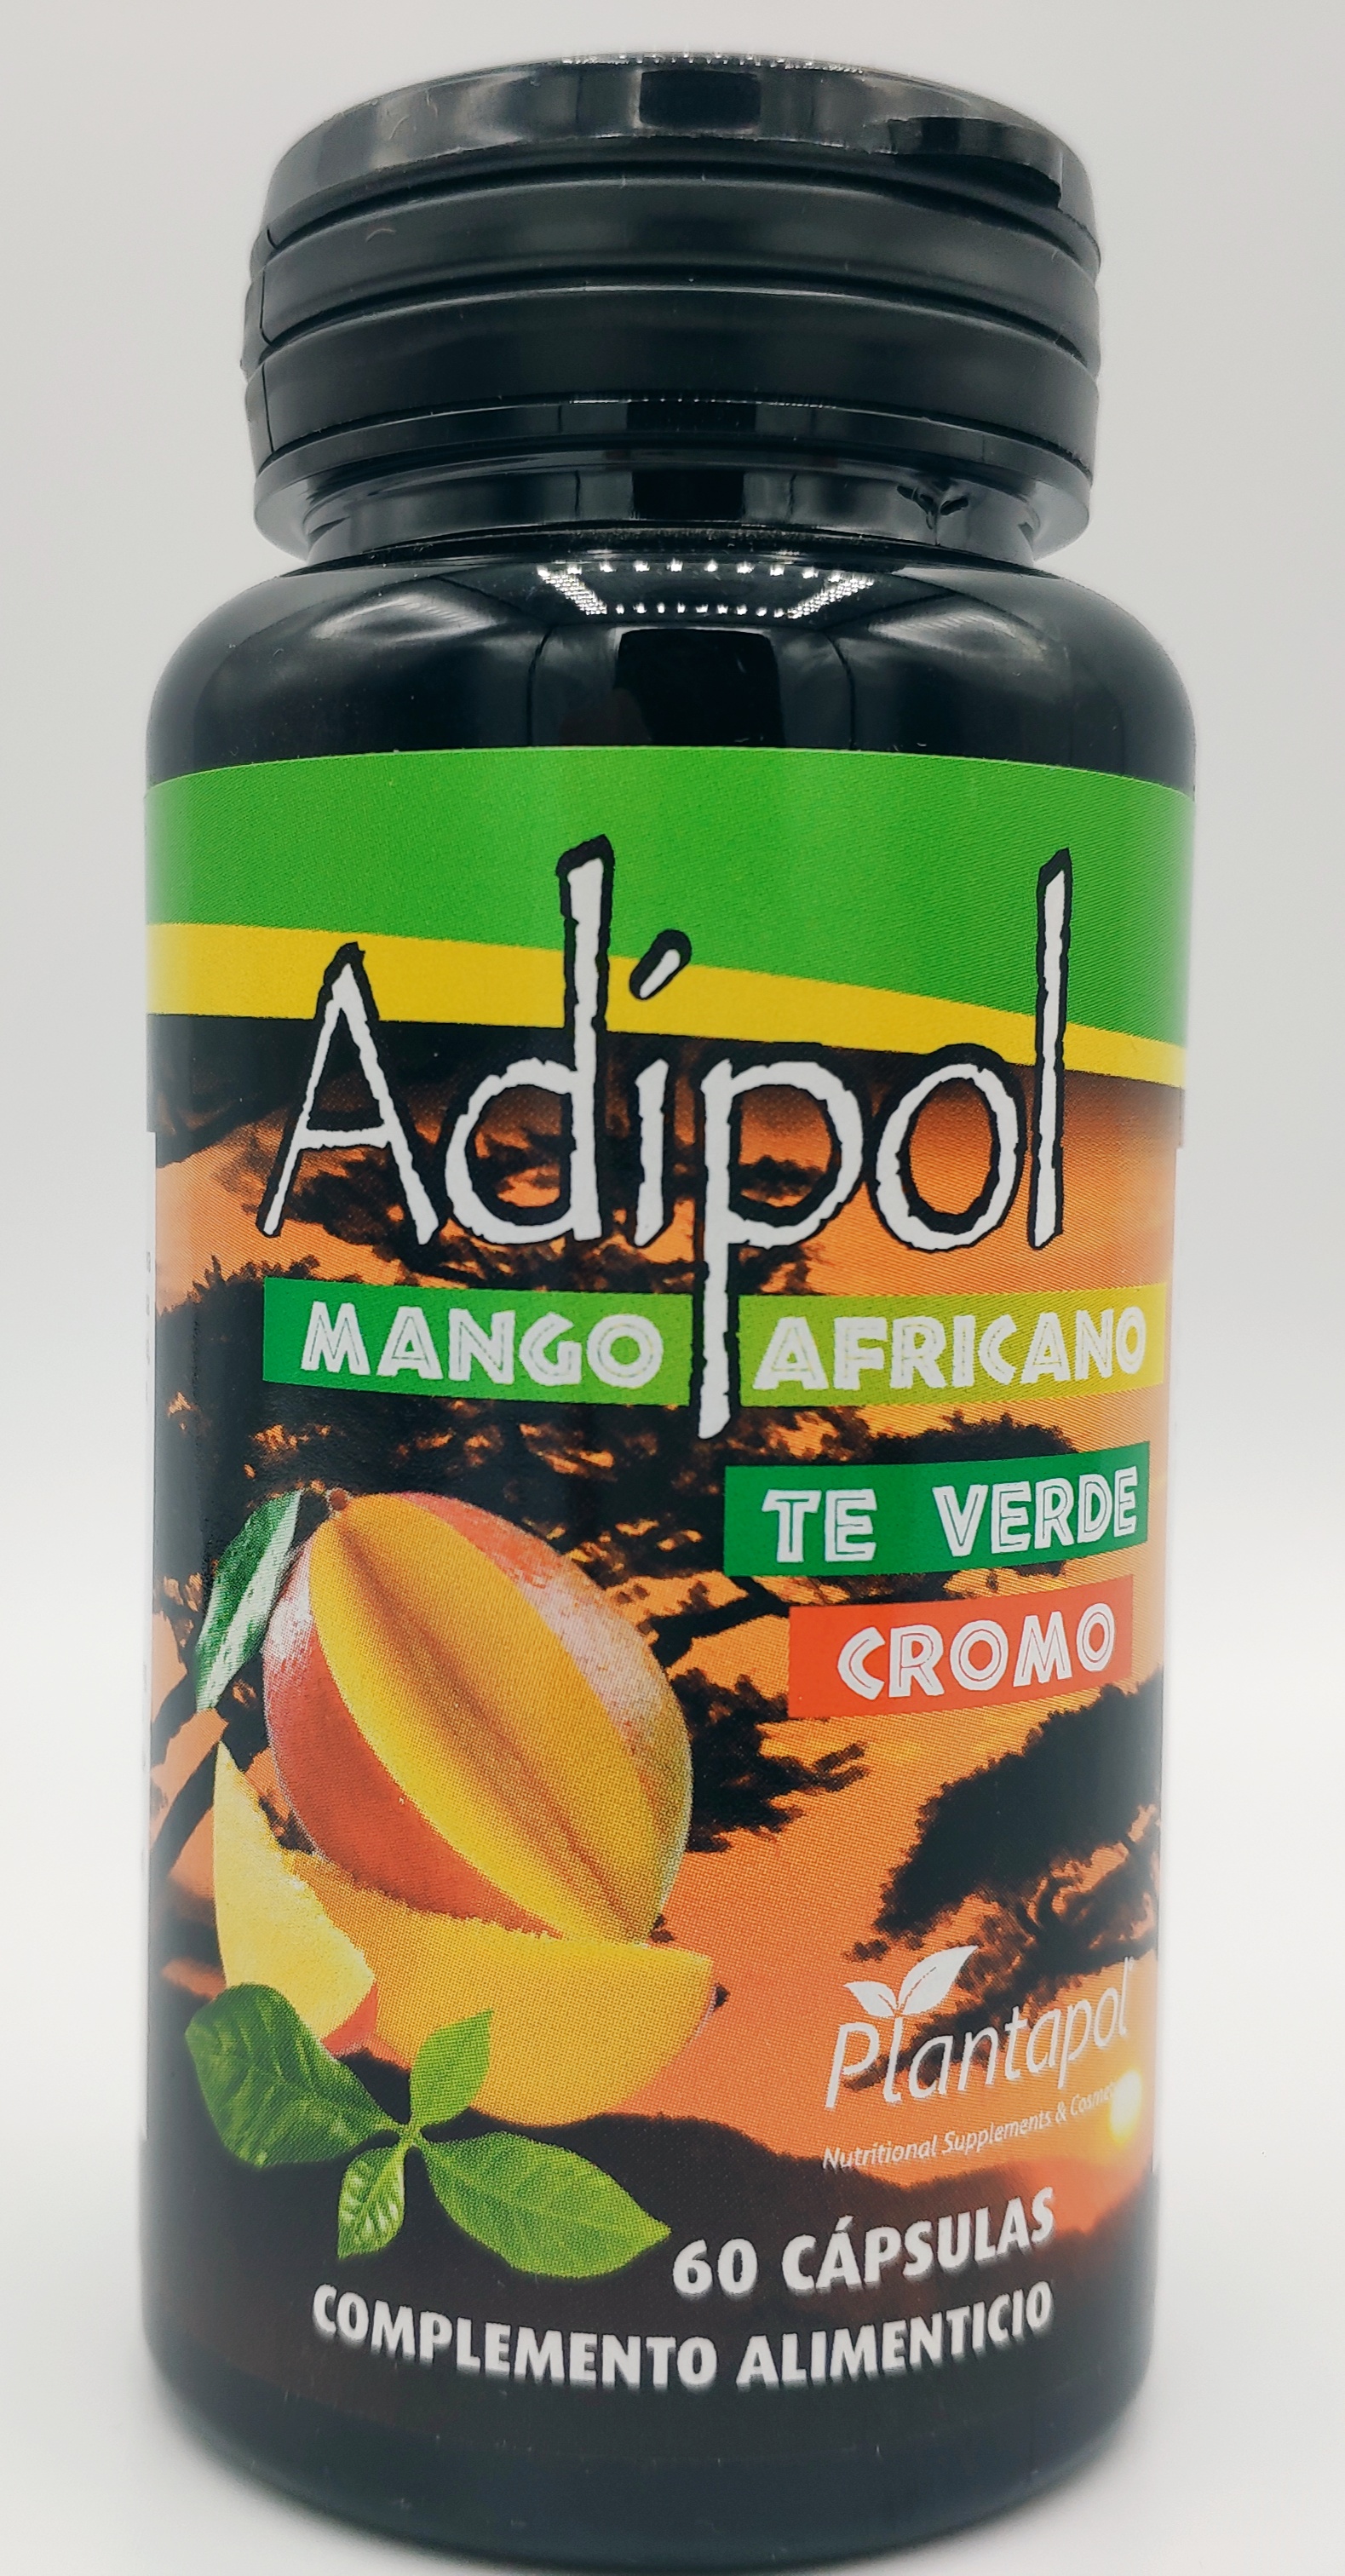 Adipol Mango Africano Te Verde Cromo, 60 cápsulas